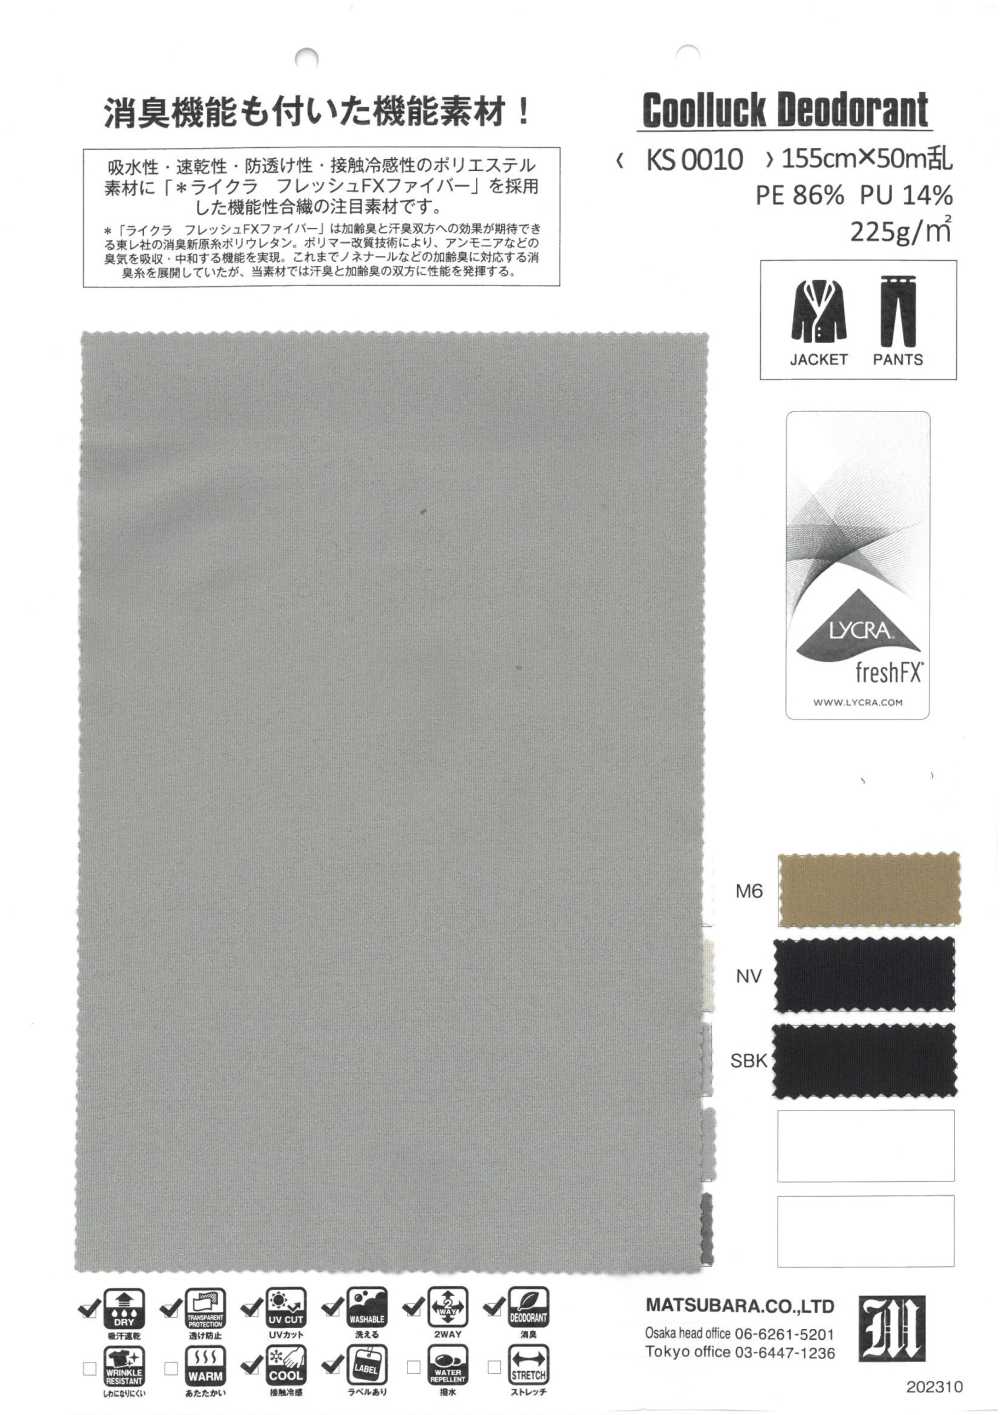 KS0010 Colluck Deodorant[Textilgewebe] Matsubara